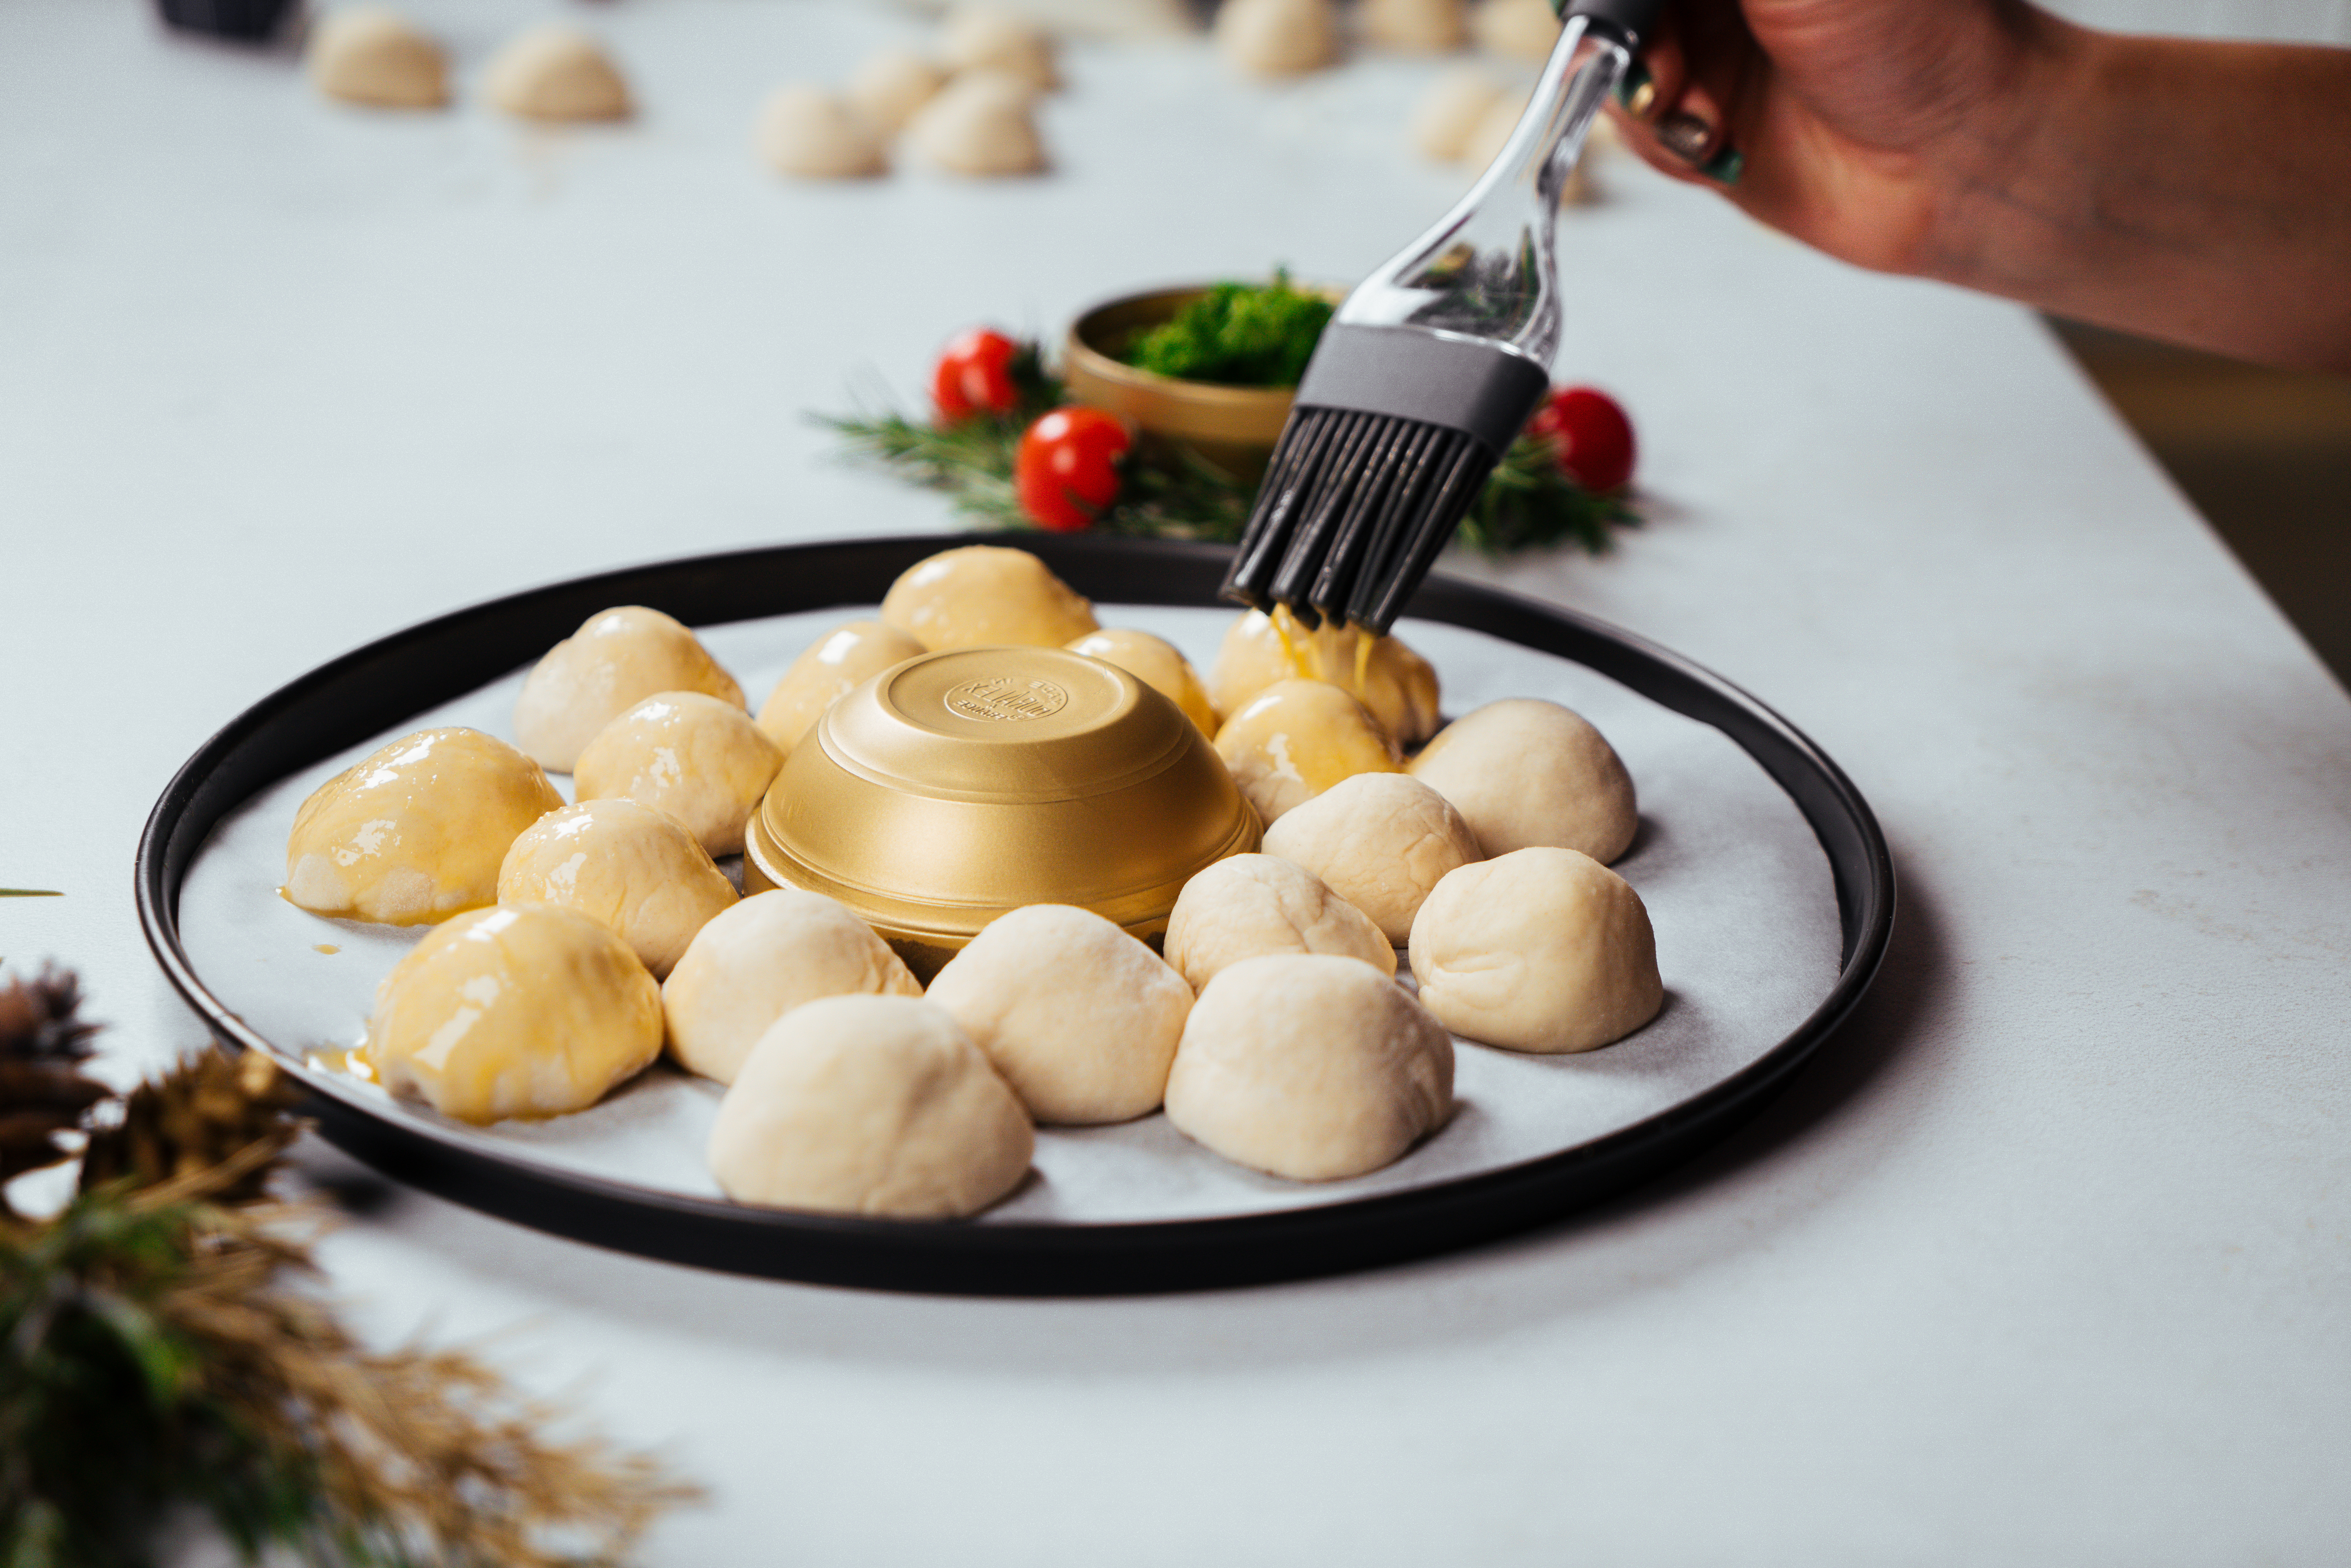 ideas de recetas caseras paso a paso, pan navideño casero relleno de queso mozzarella adornado de romero fresco y tomates uva